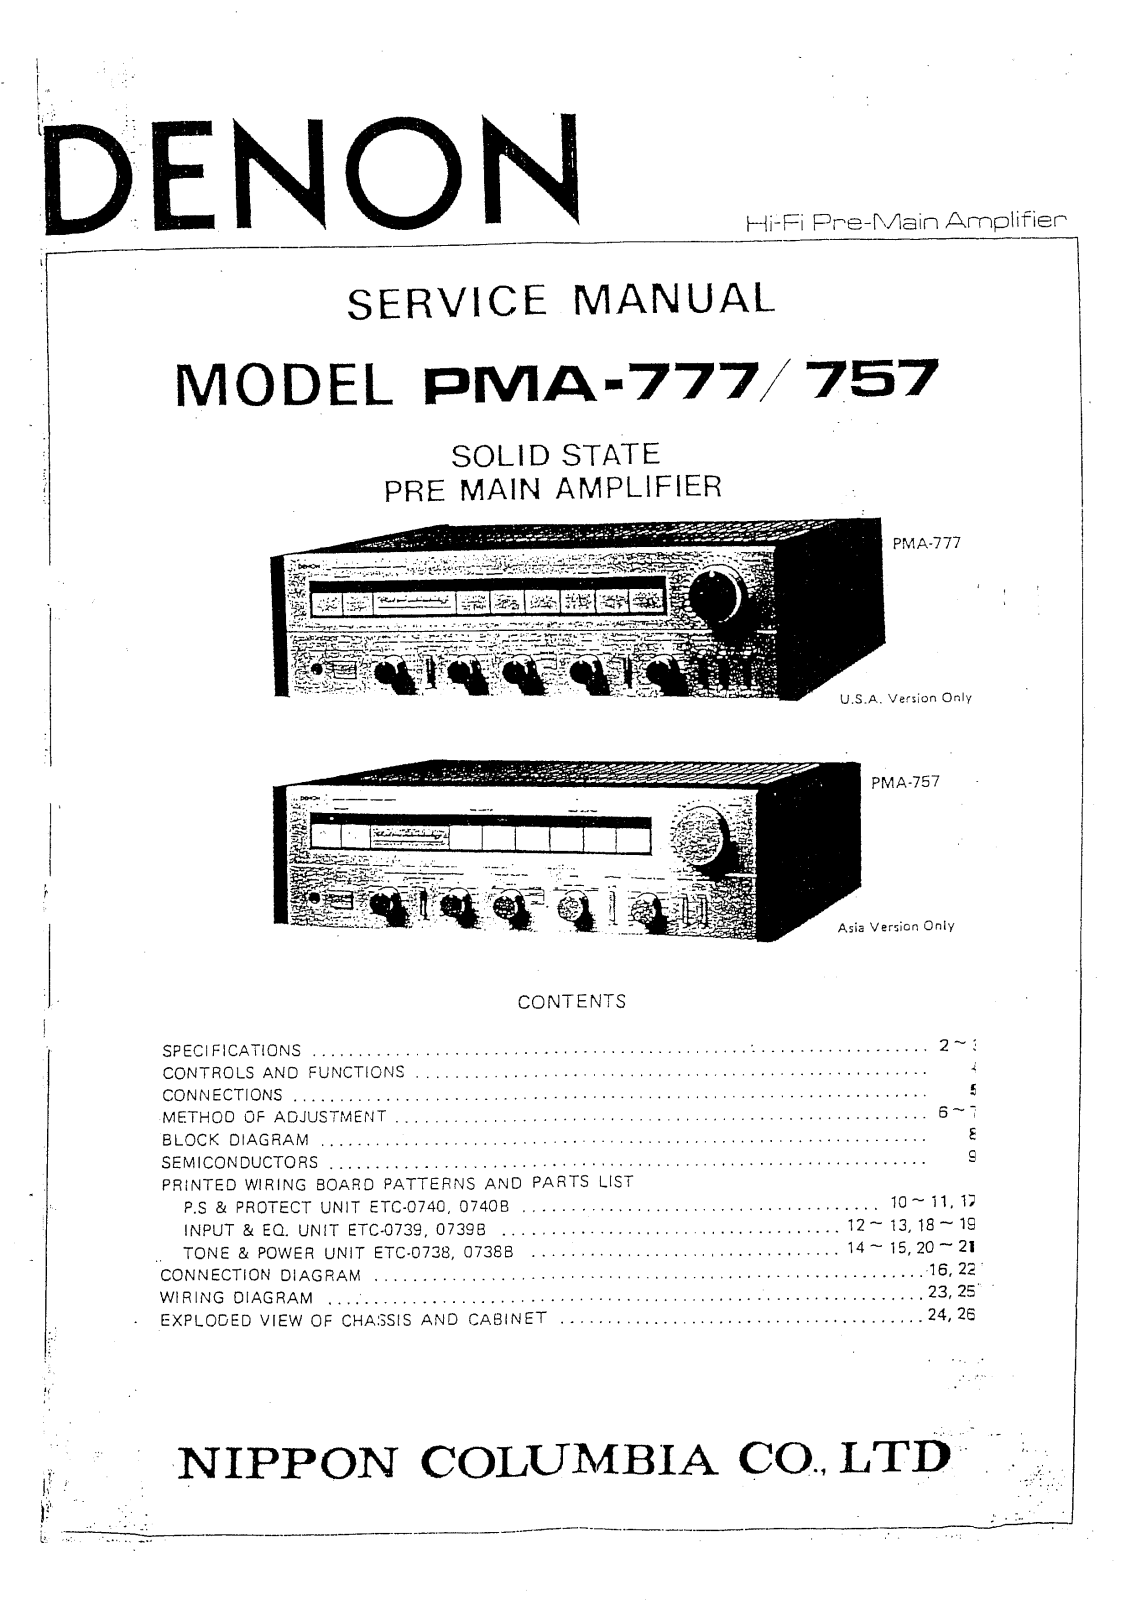 Denon PMA-777, PMA-757 Service Manual